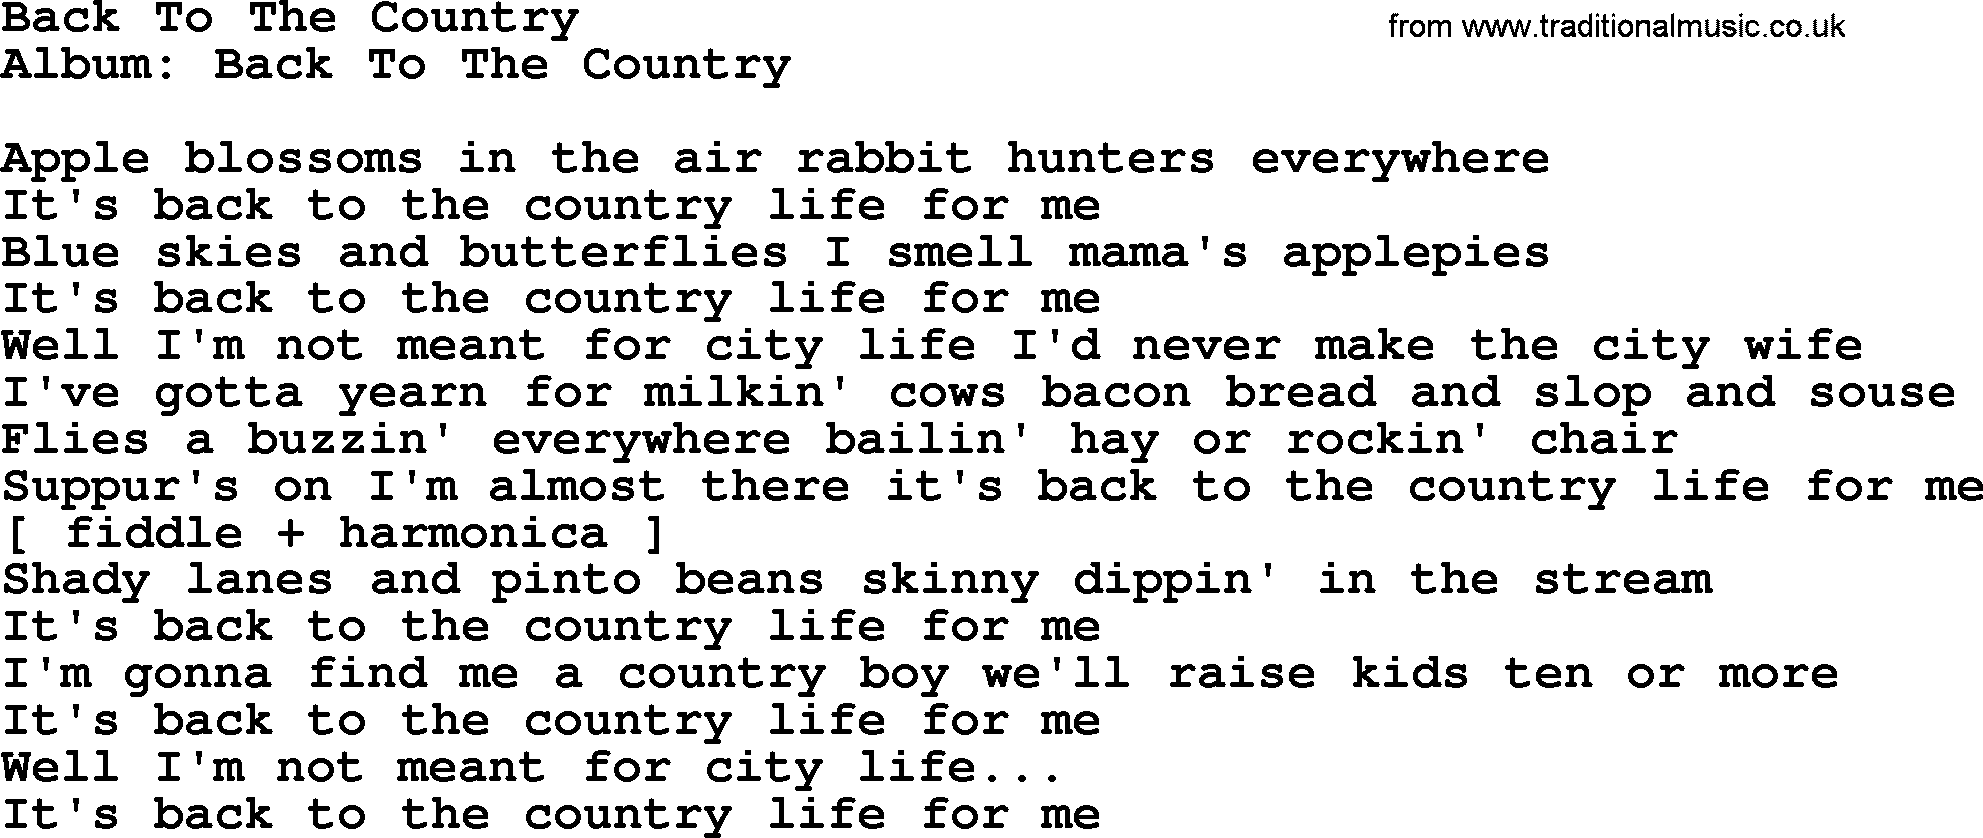 Loretta Lynn song: Back To The Country lyrics